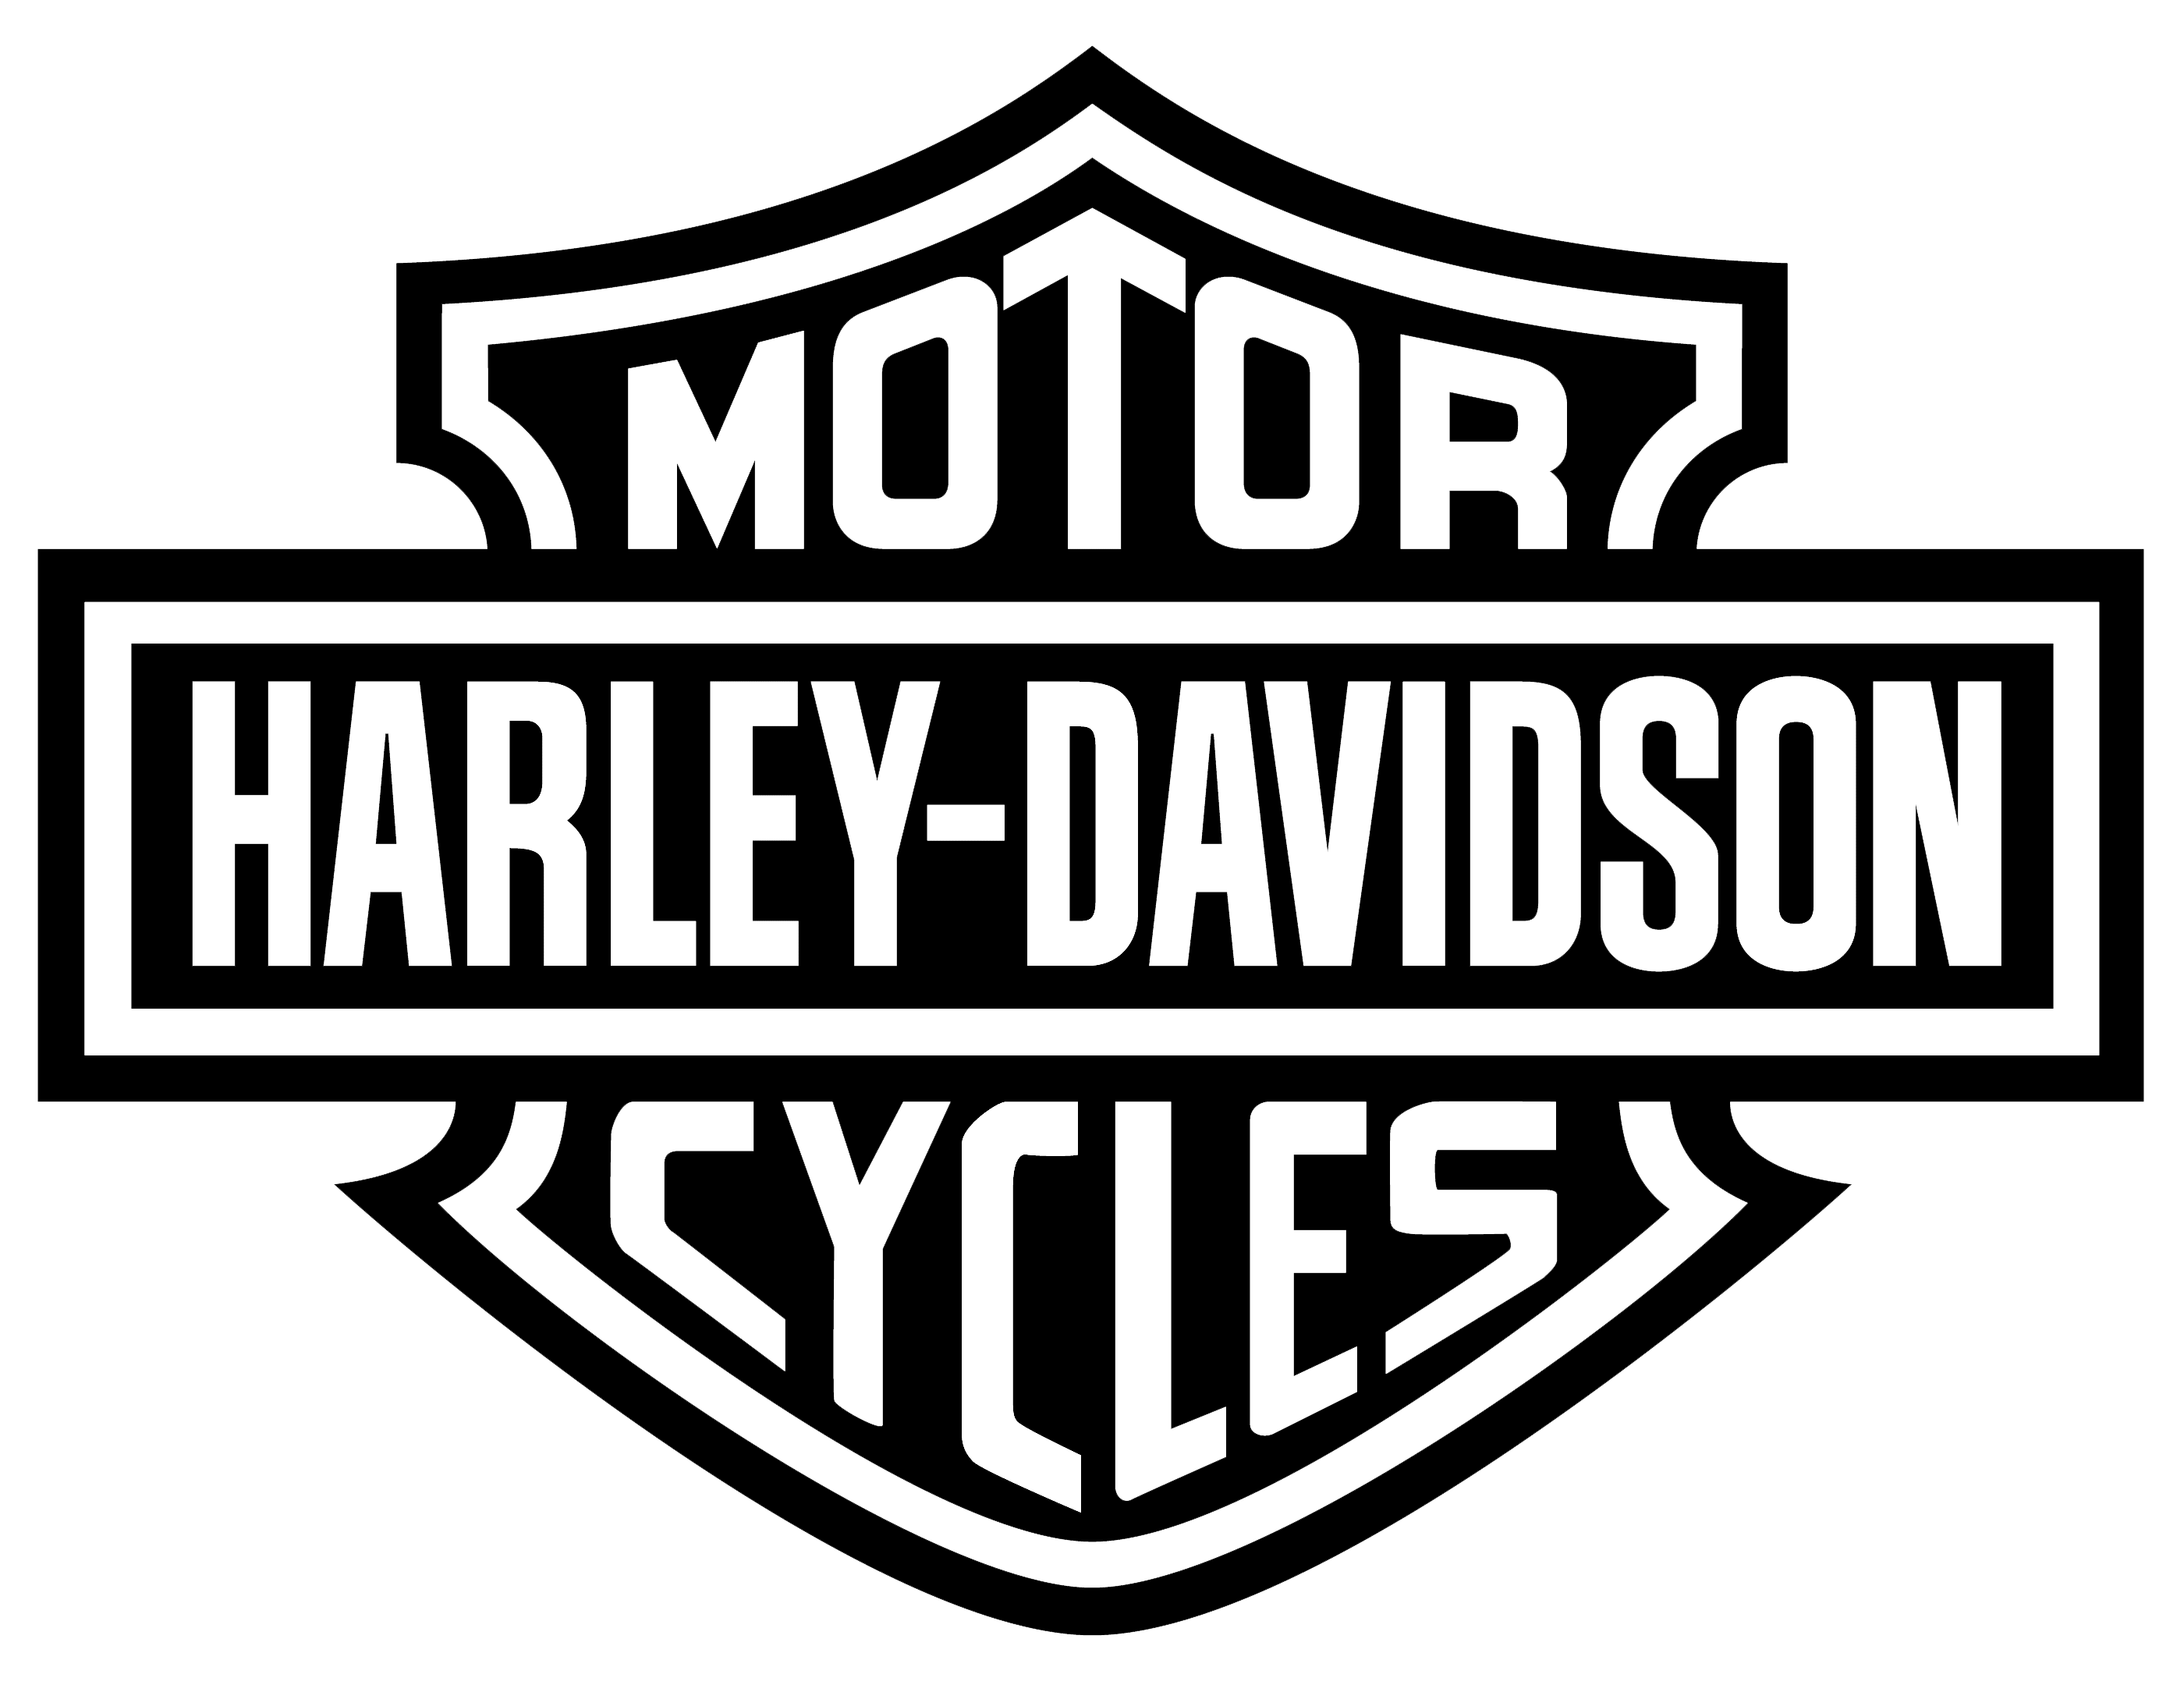 Harley davidson logo motorcycle brands png